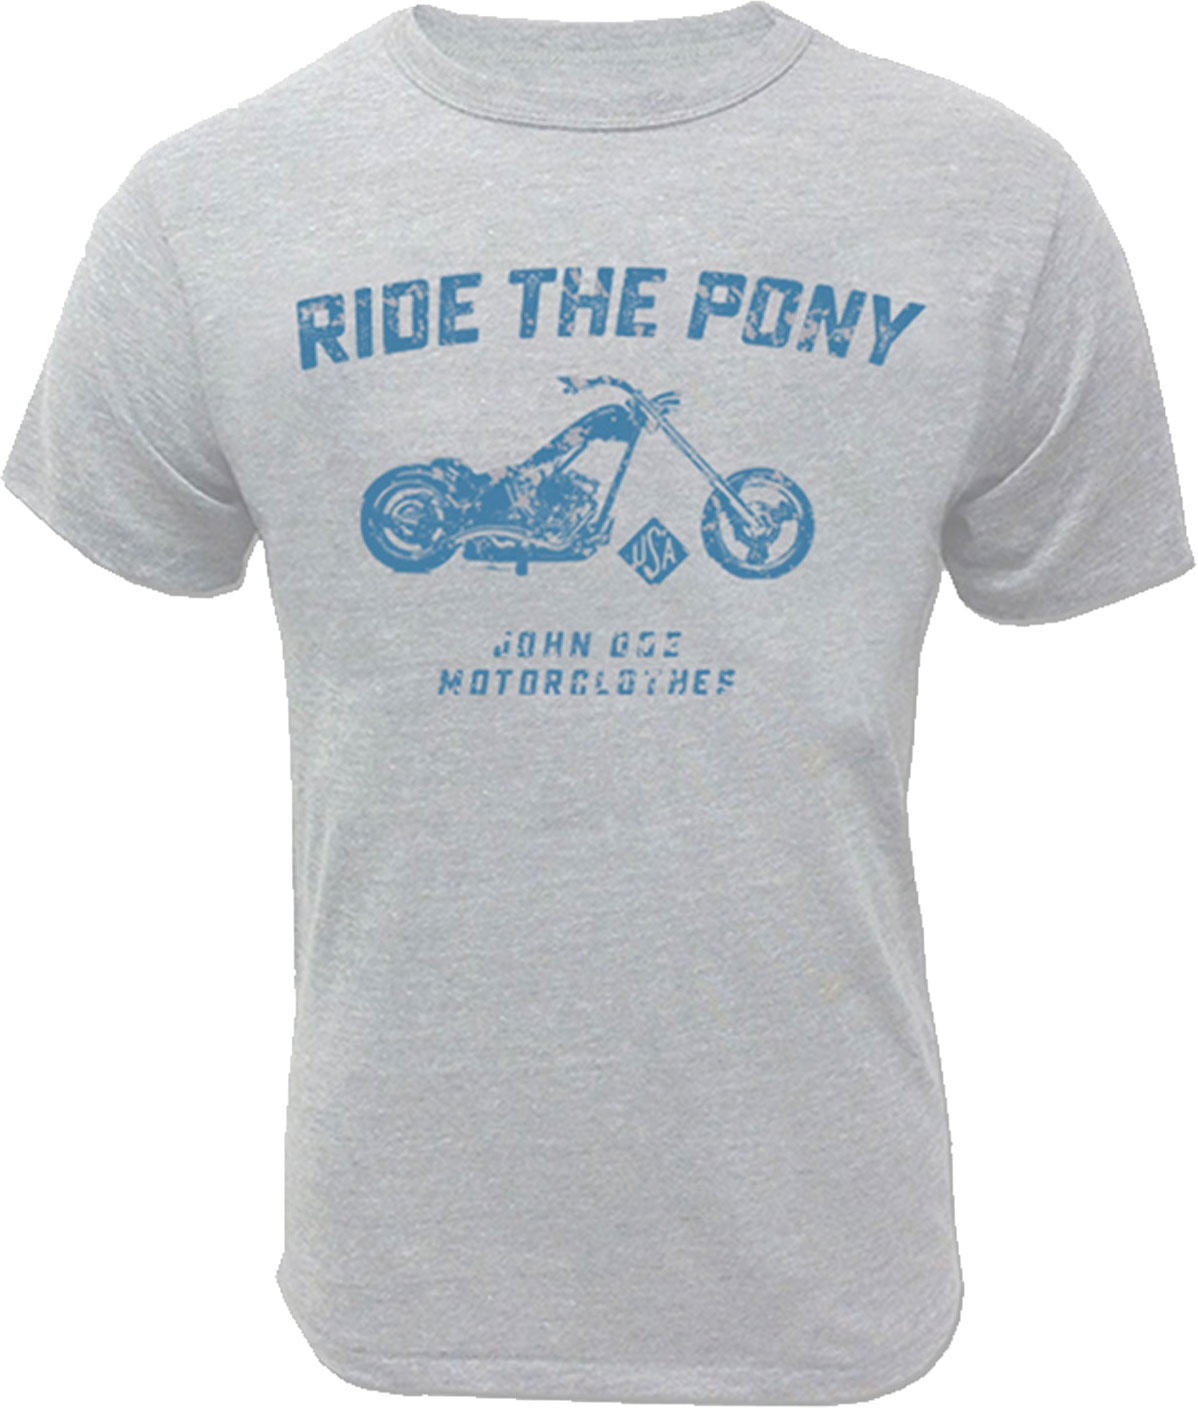 John Doe Ride The Pony, t-shirt - Gris Clair/Bleu Clair - S